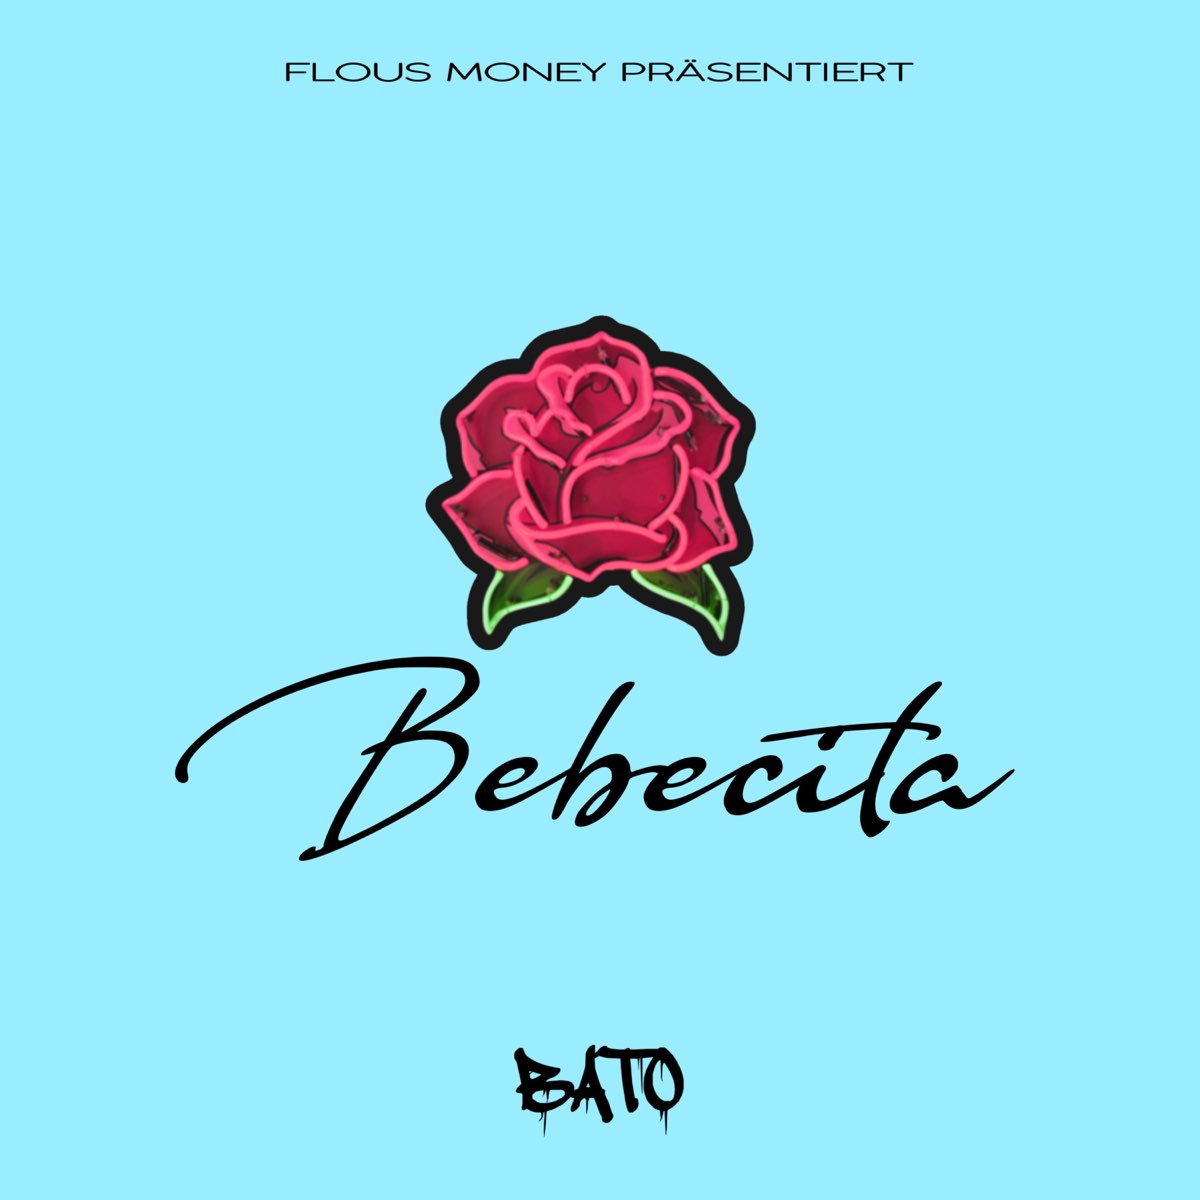 Bebecita - Single by BATO on Apple Music.